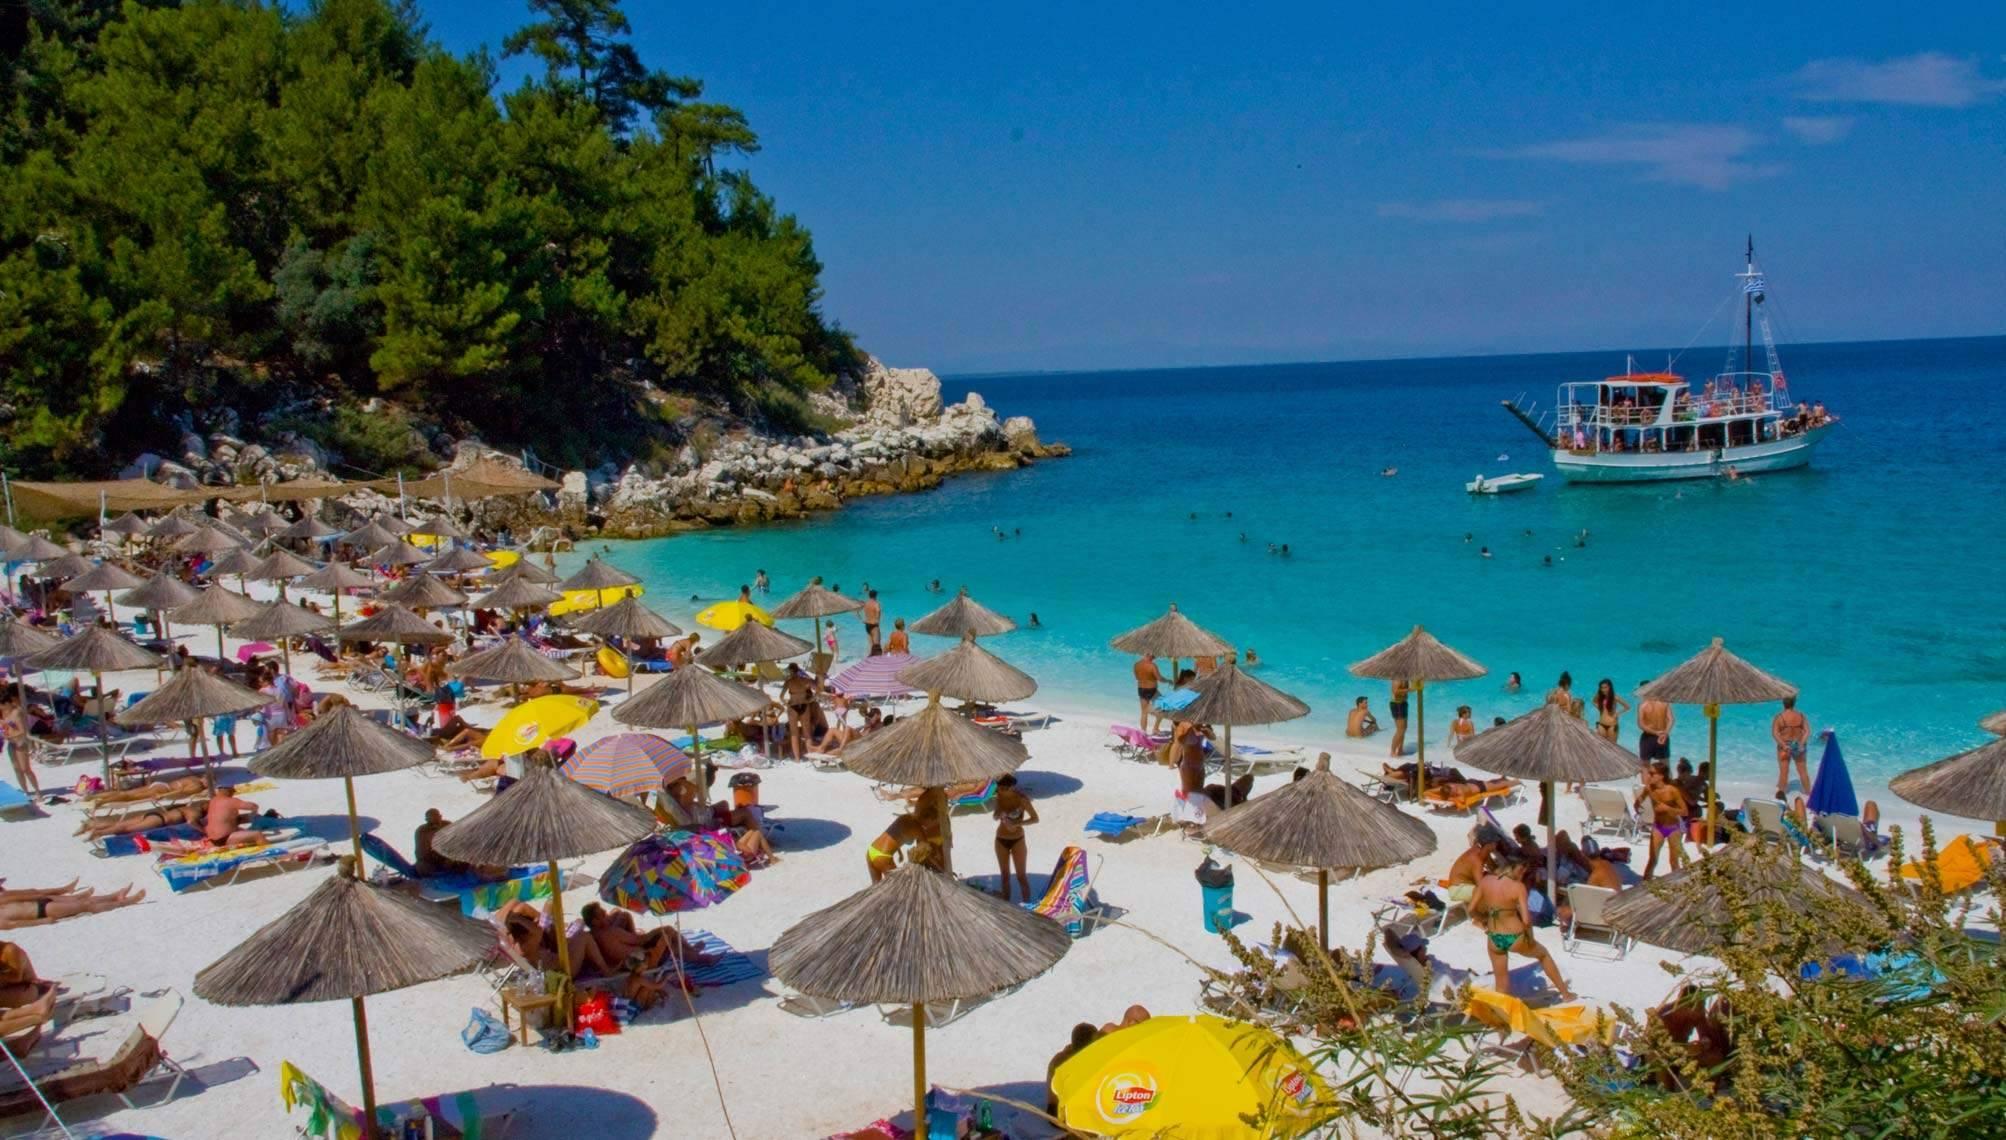 H Παραλία Σαλιάρα στη Θάσο πολλές ομπρέλες στην ακτή και ένα τουριστικό καραβάκι στη θάλασσα